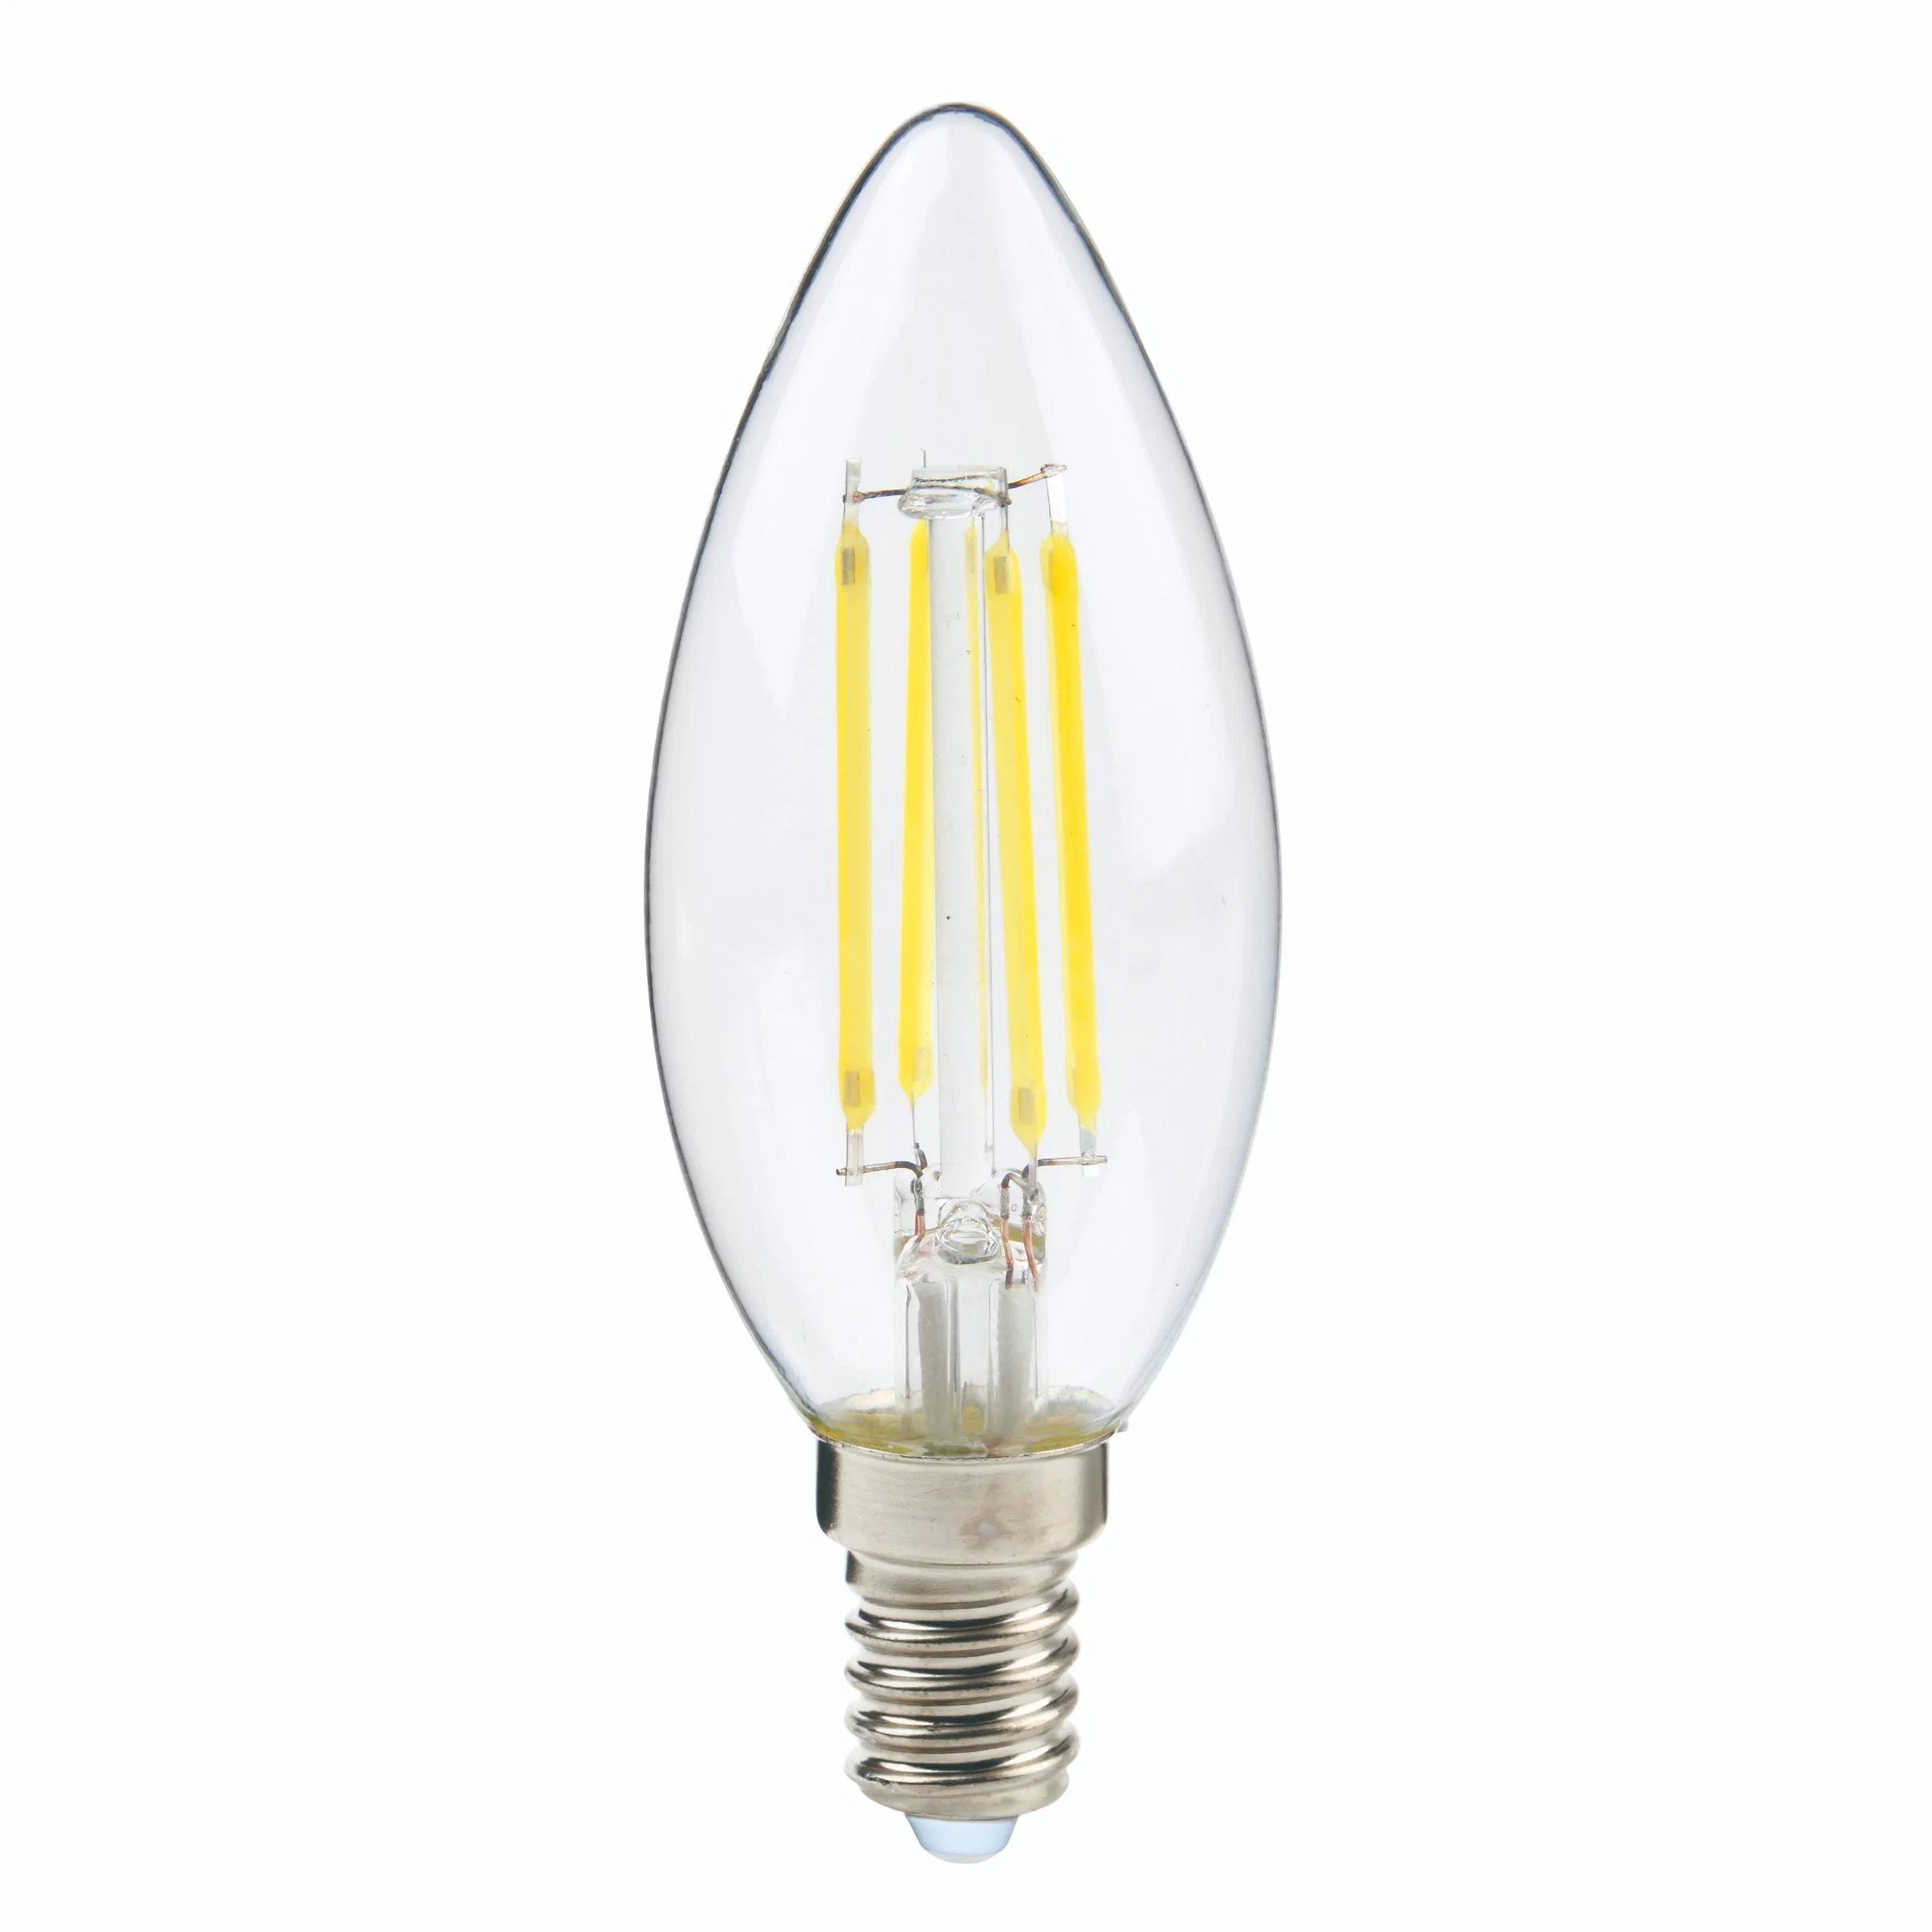 LED Candle Light Decorative Filament Bulb Diammable 4W Filament Bulb Light Source